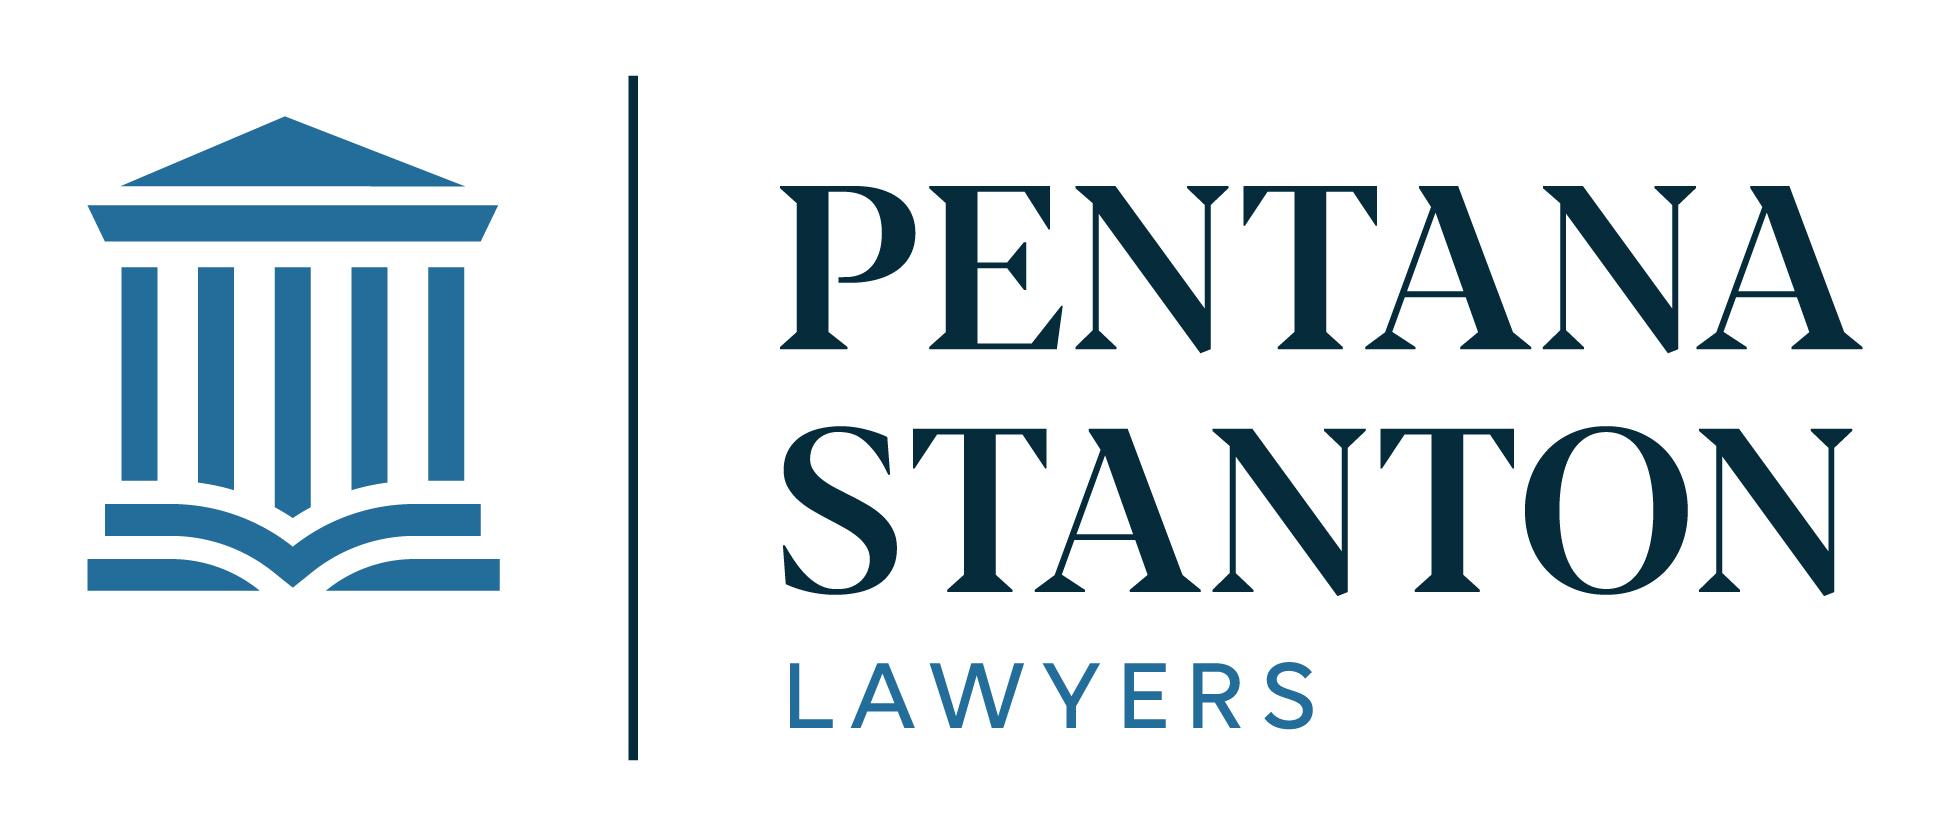 Pentana Stanton Lawyers Dandenong (03) 9002 2800